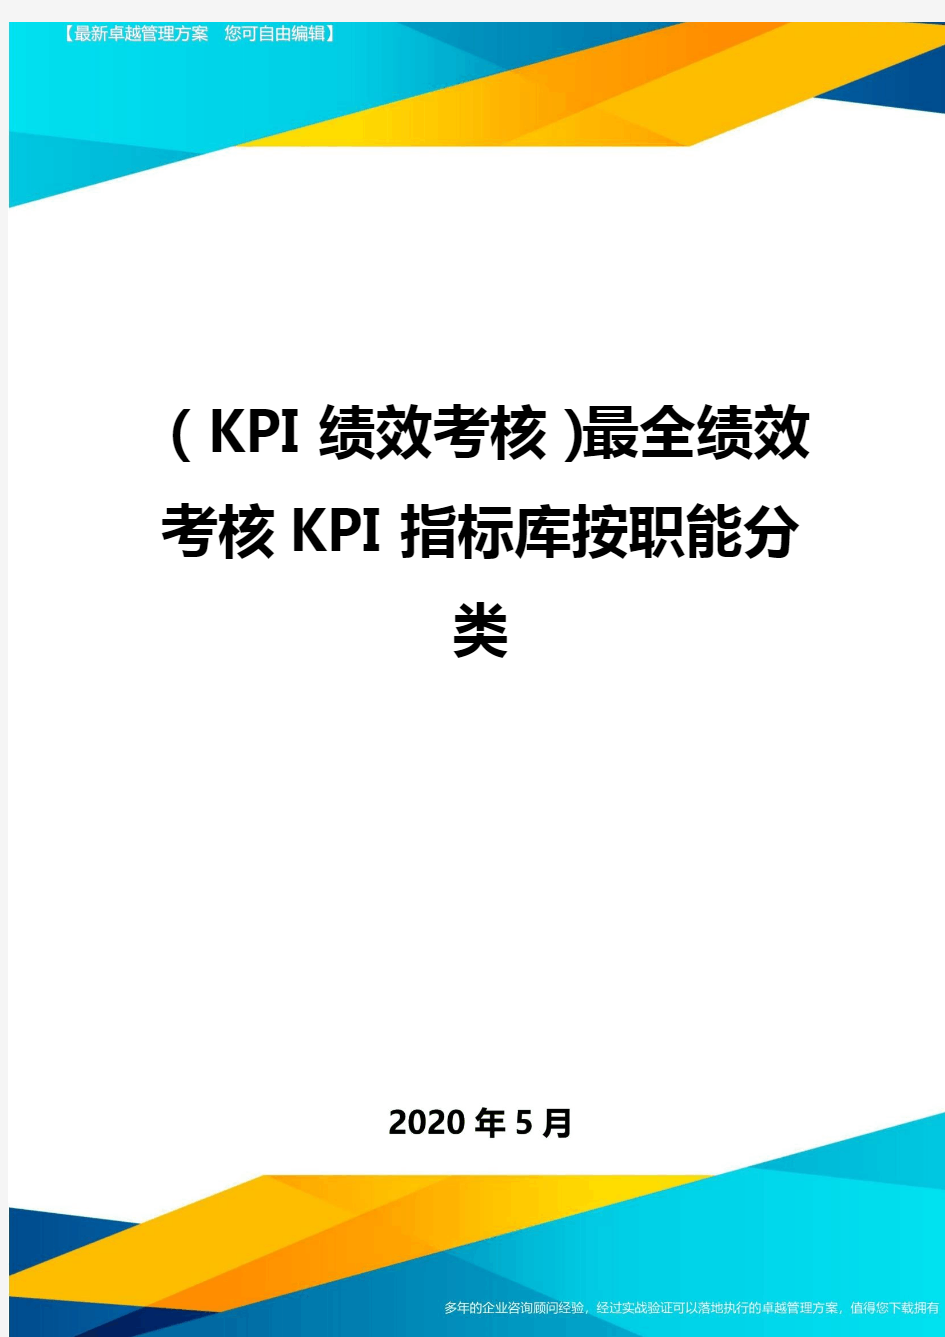 ( KPI绩效考核)最全绩效考核KPI指标库按职能分类